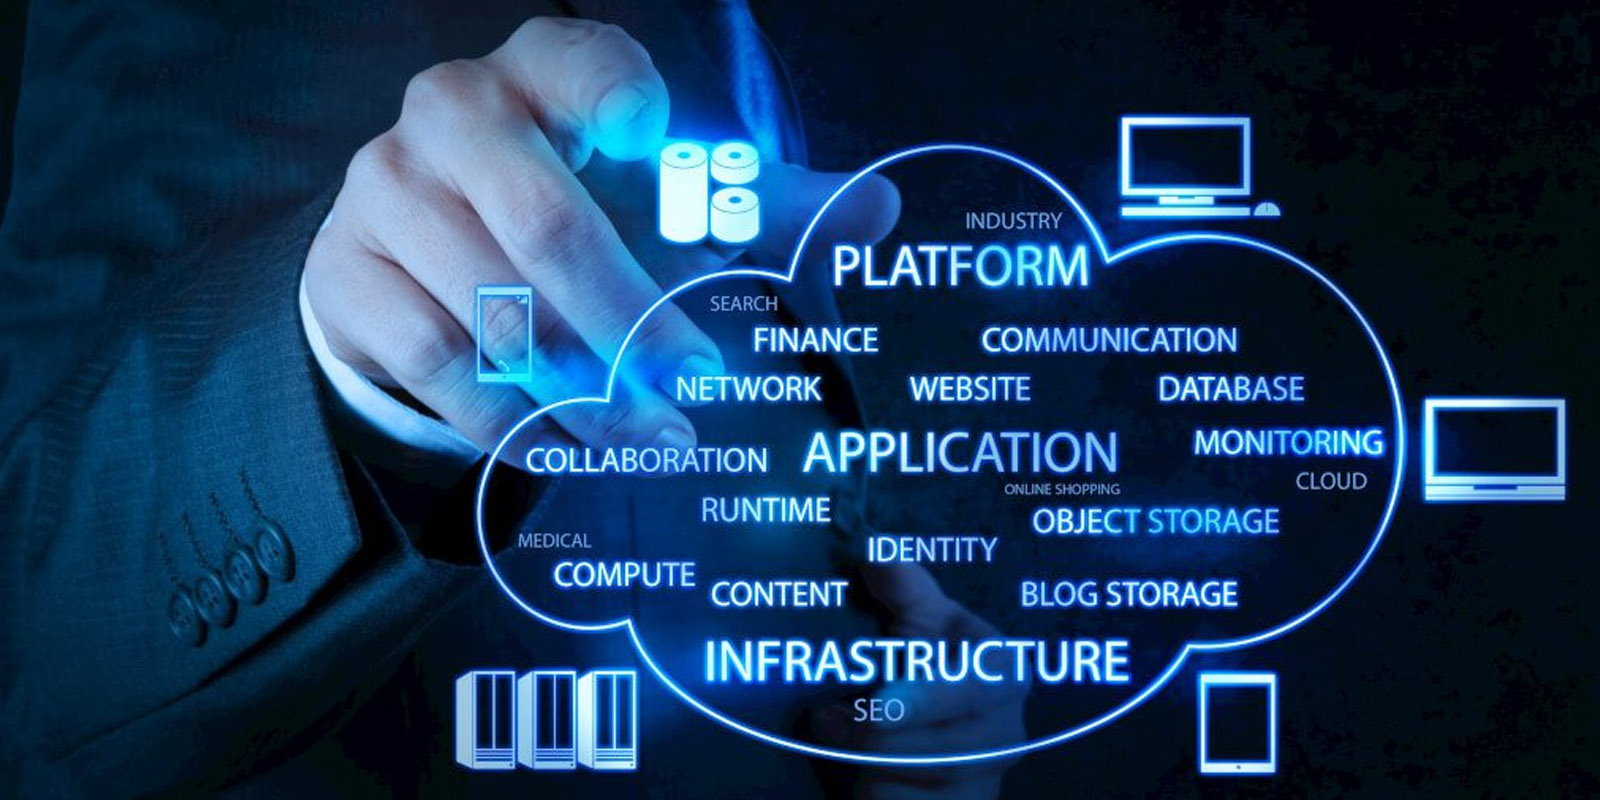 Cloud Computing - Software & Web Design experts